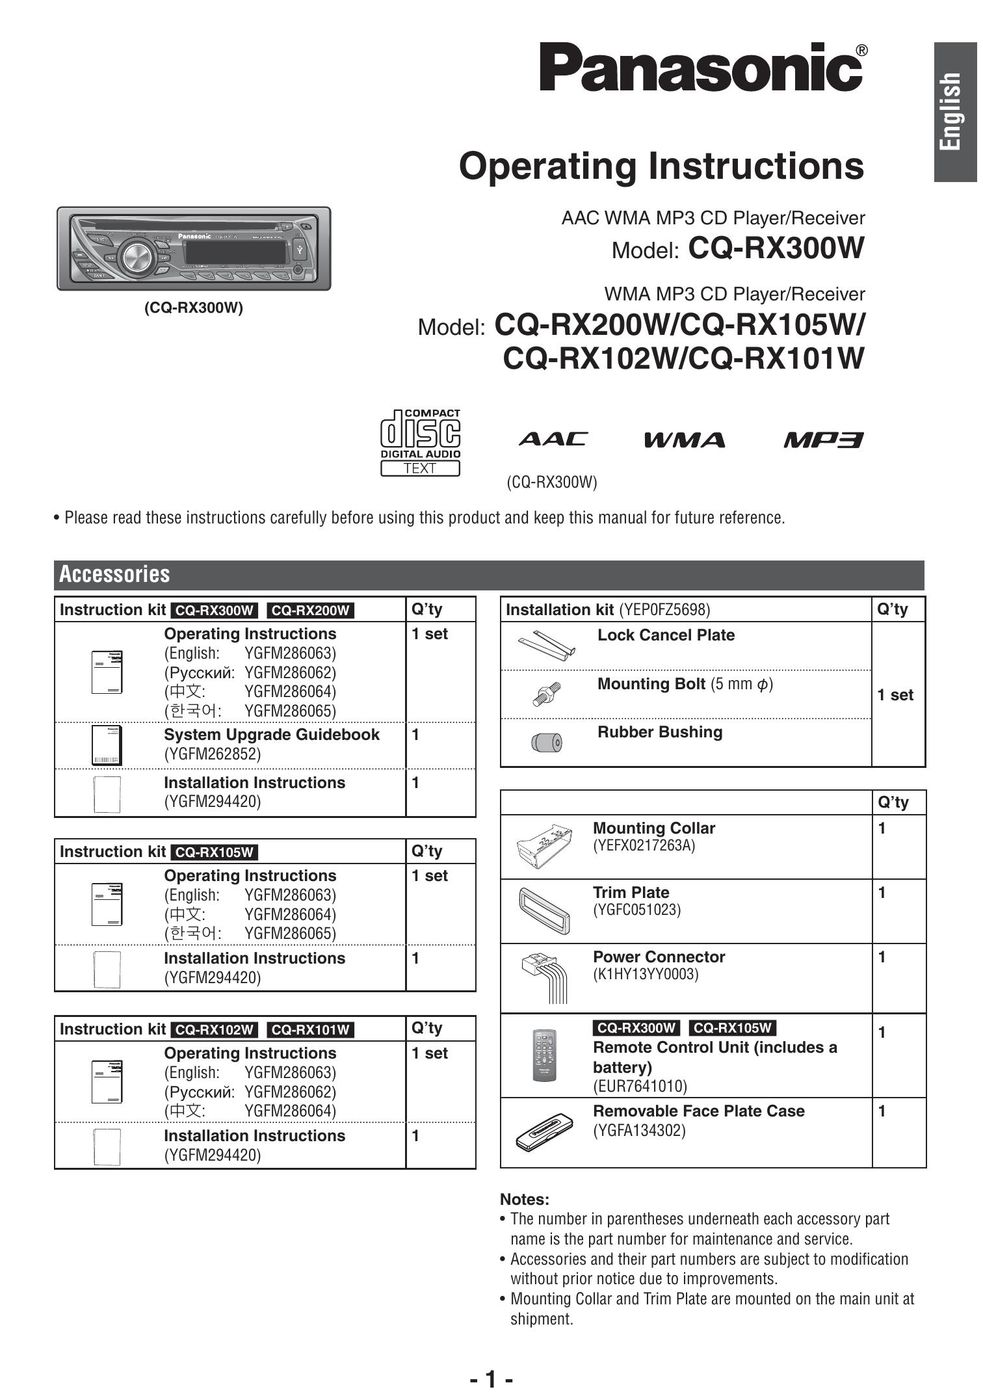 Panasonic CQ-RX200W MP3 Player User Manual